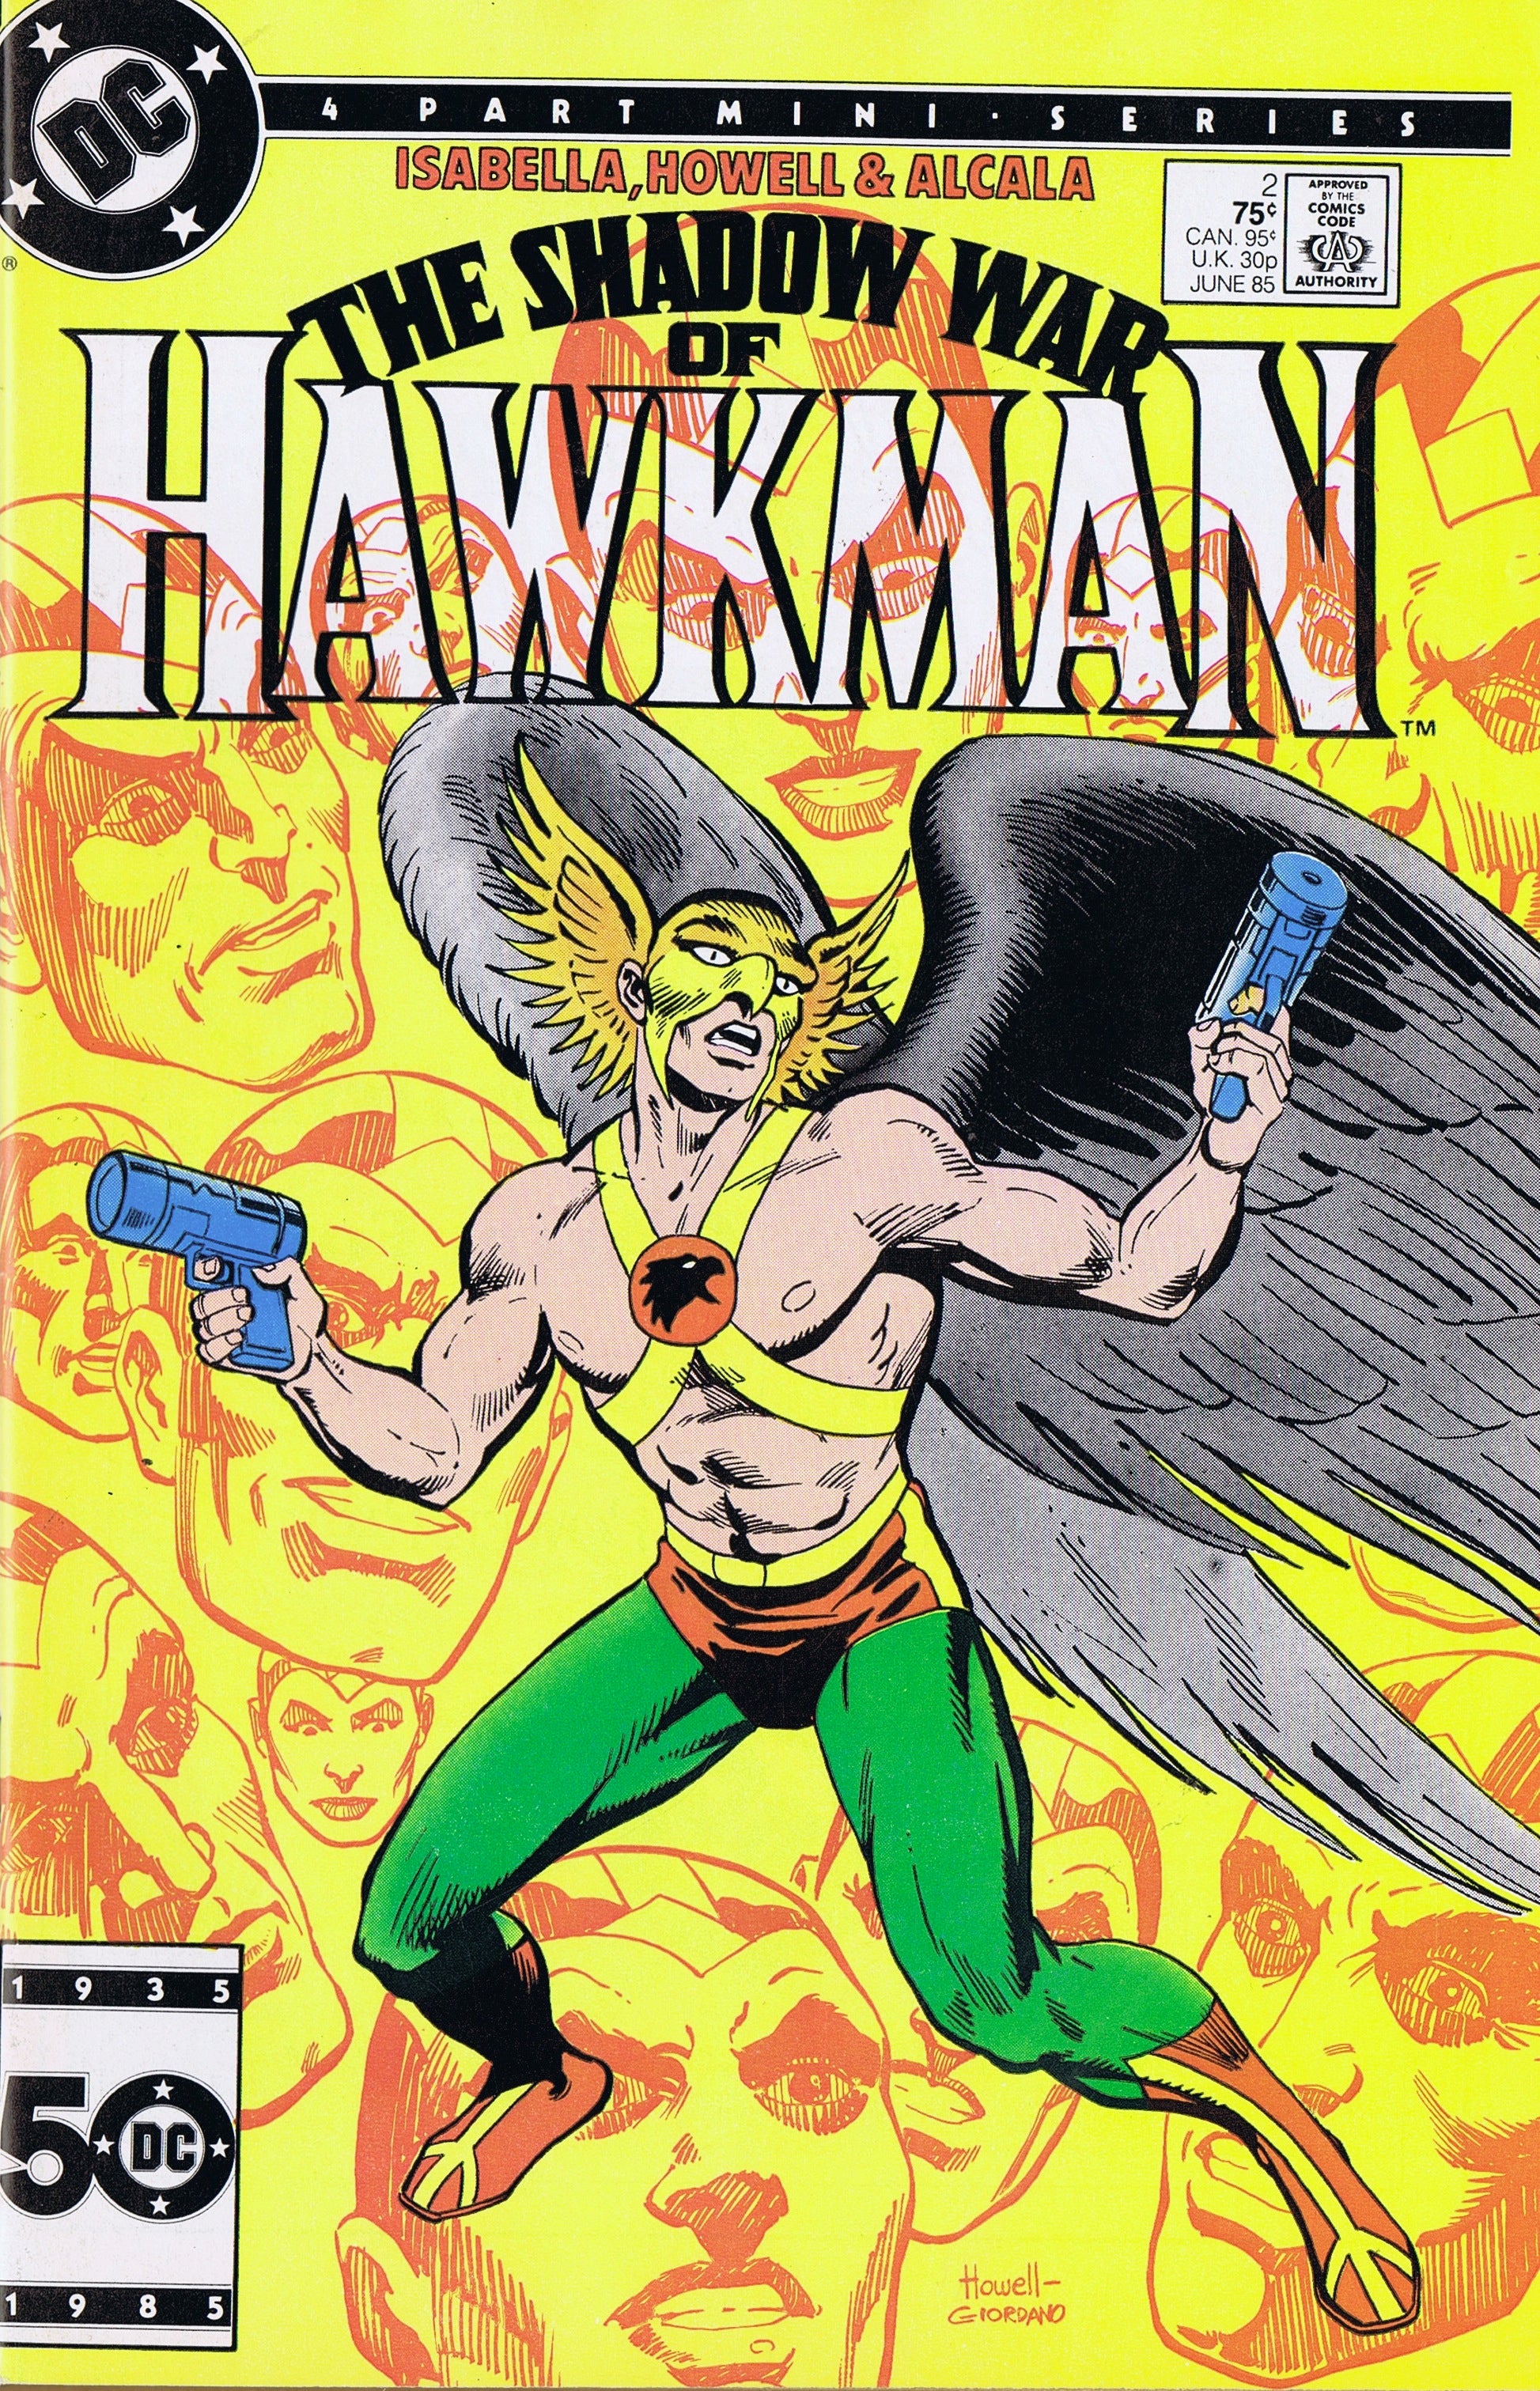 DC COMICS - THE SHADOW WAR OF HAWKMAN #2